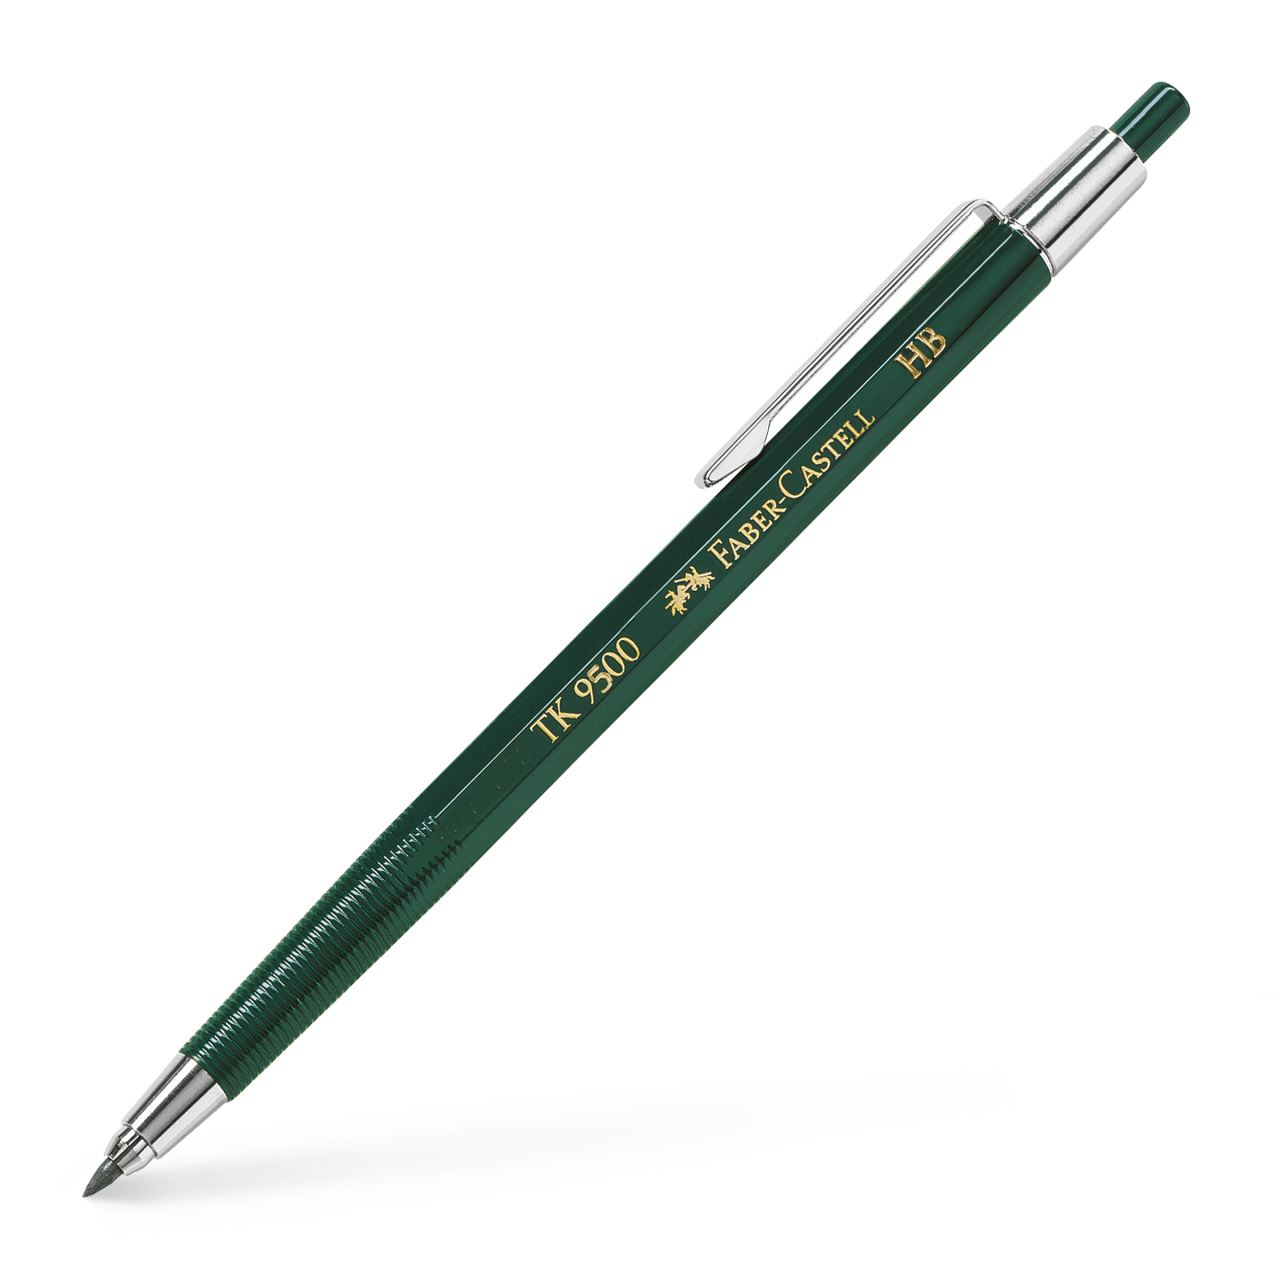 Faber-Castell - TK 9500 clutch pencil, HB, Ø 2 mm